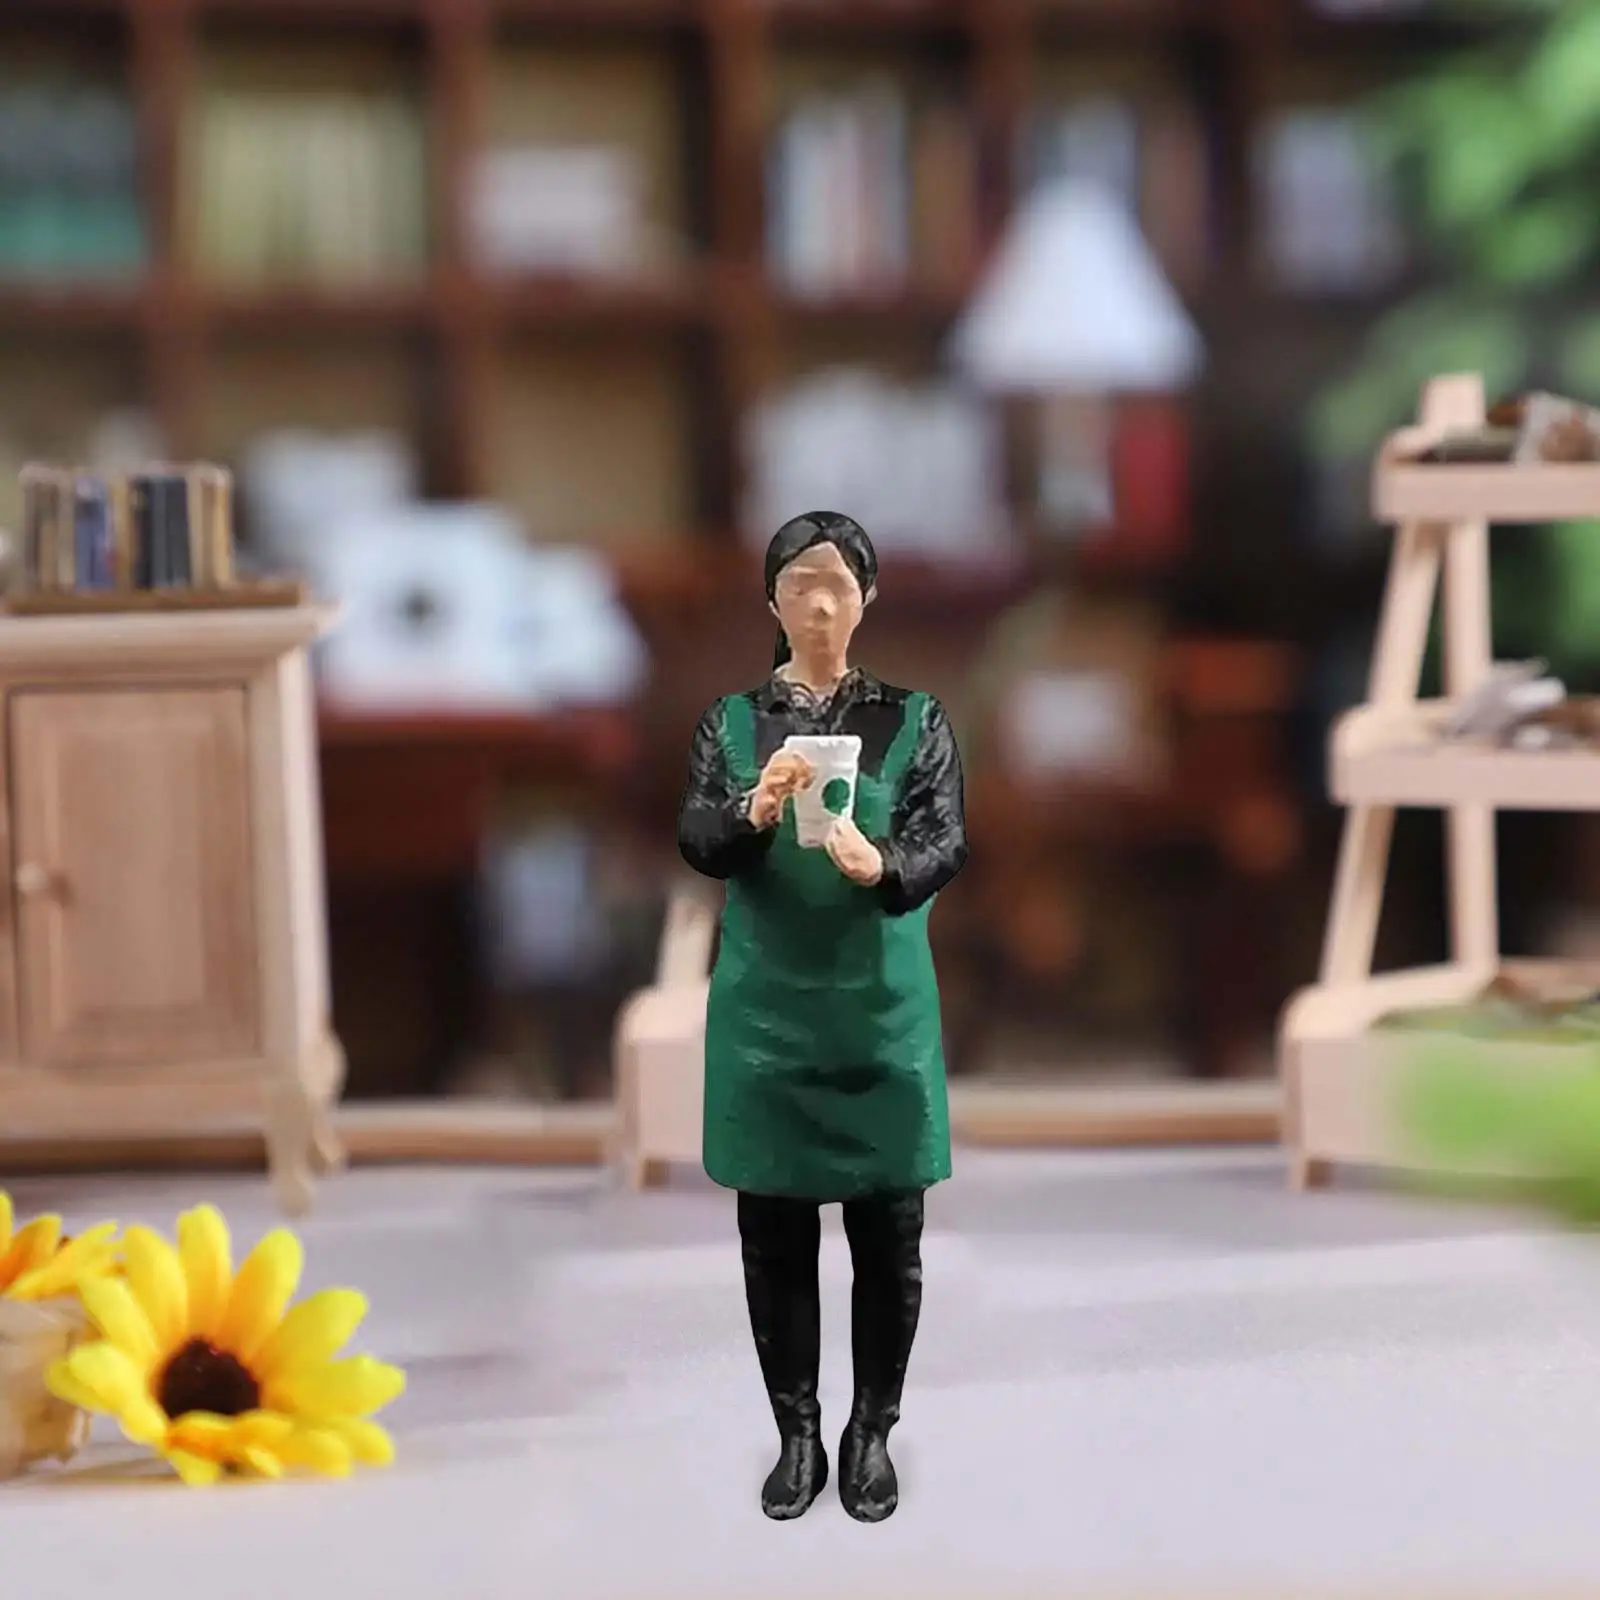 1/64 Coffee Salesperson Figures Fairy Garden Miniature Scene Ornaments